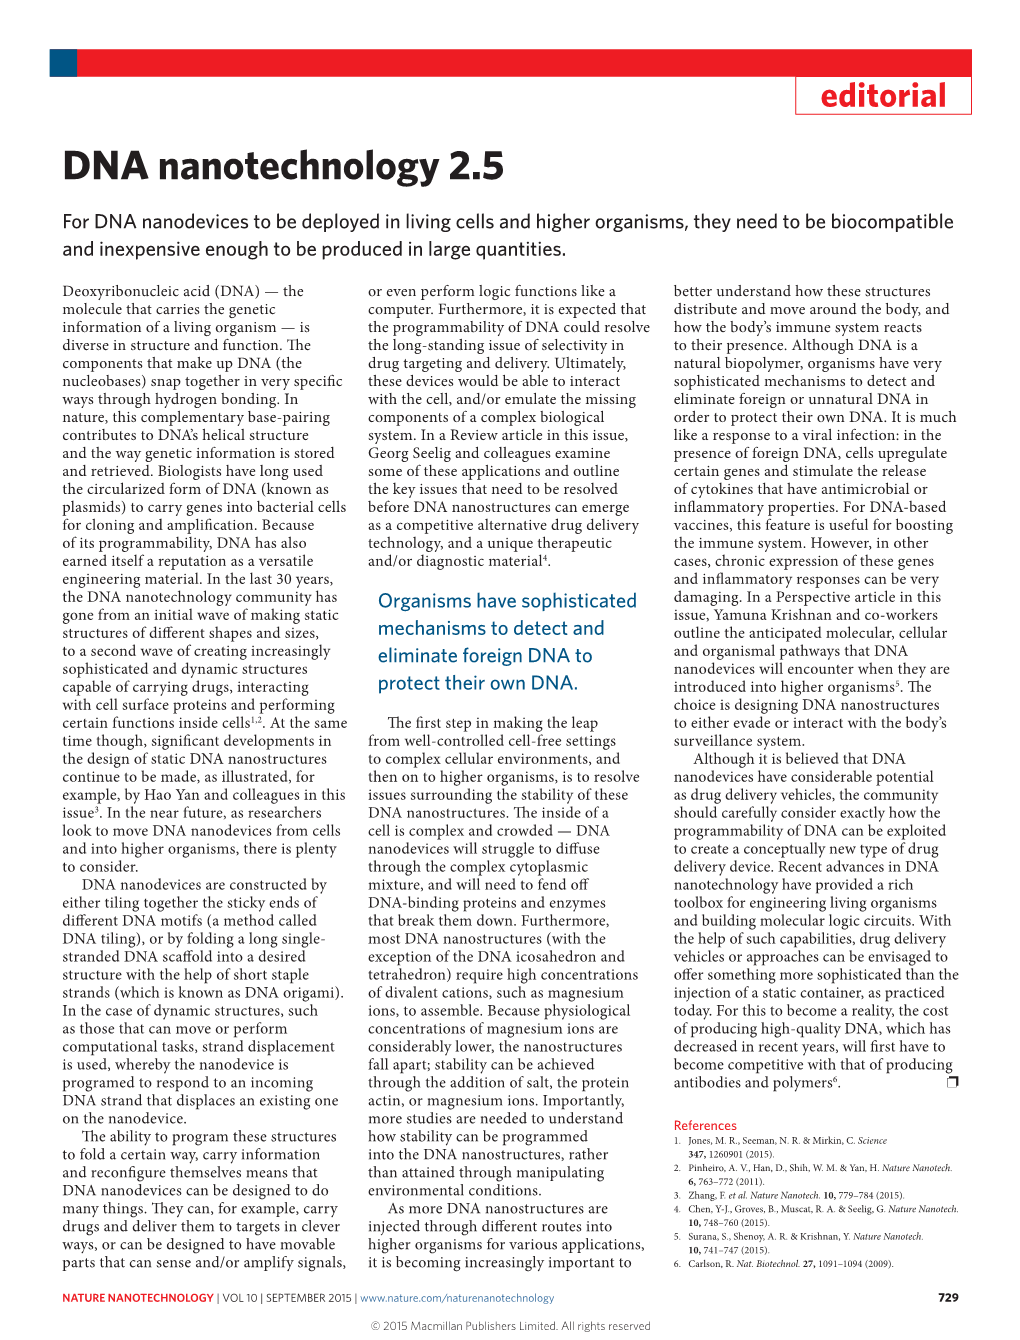 DNA Nanotechnology 2.5